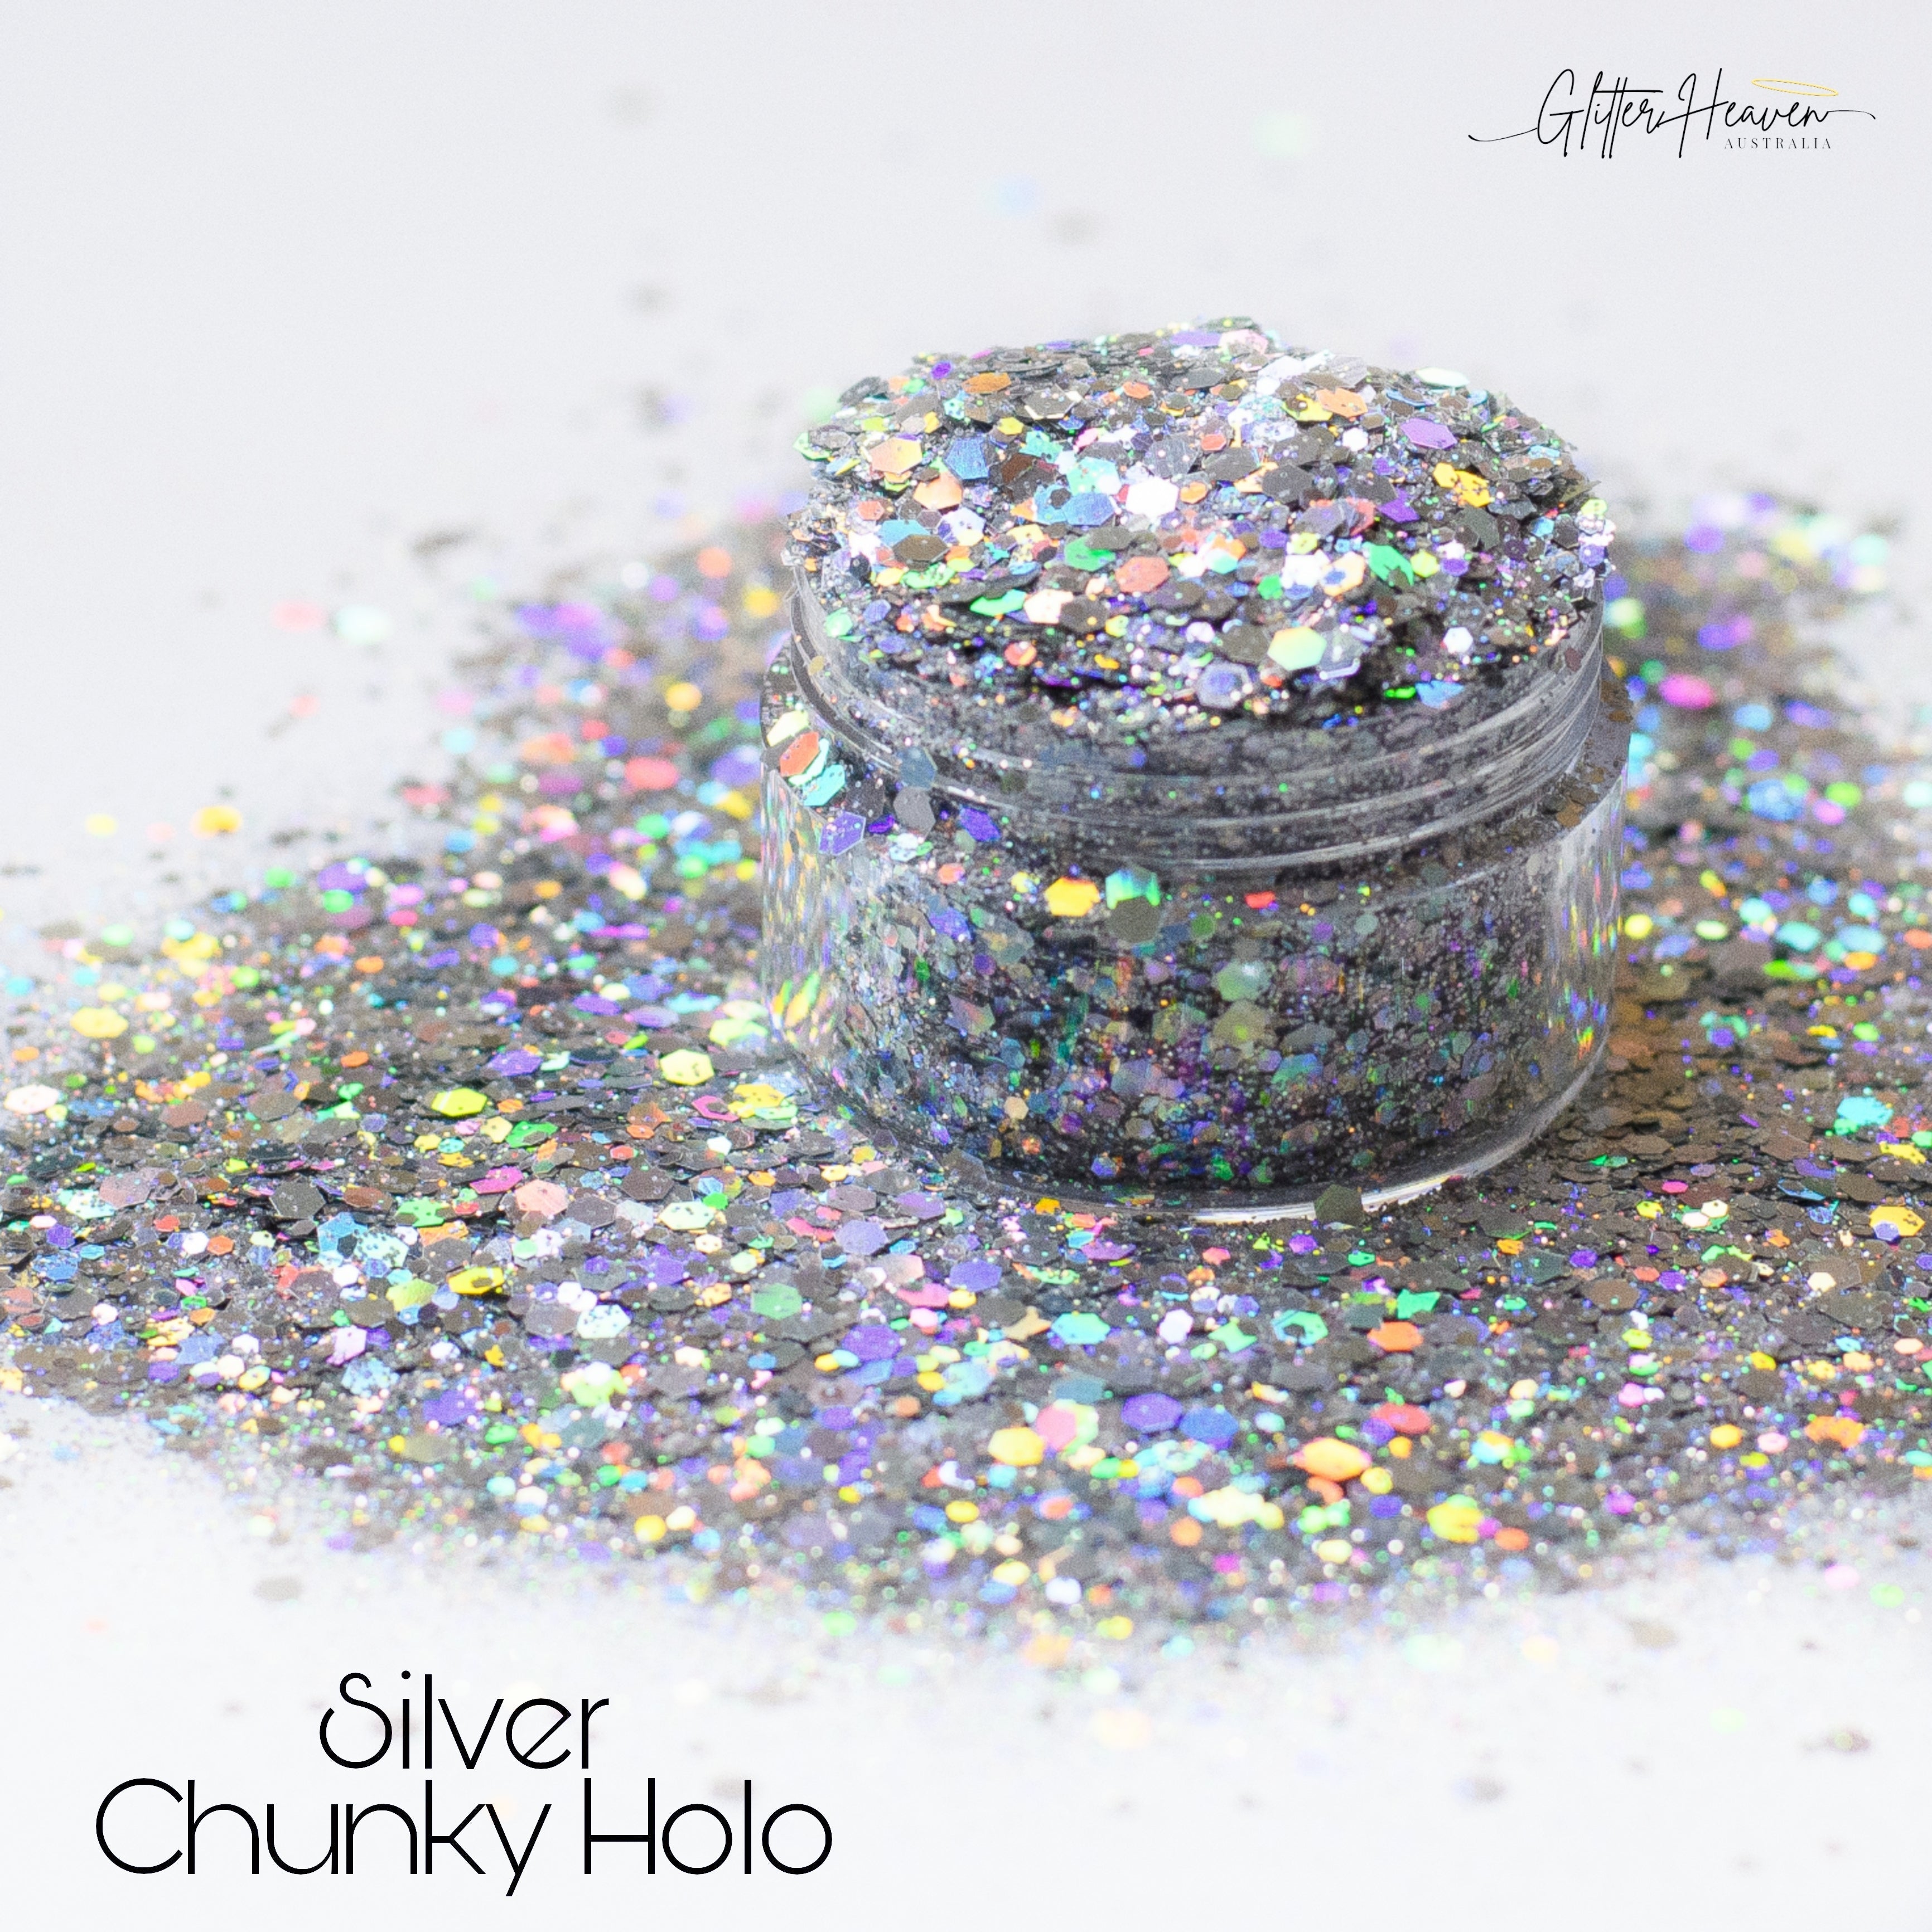 Silver Chunky Holo  Glitter Heaven Australia